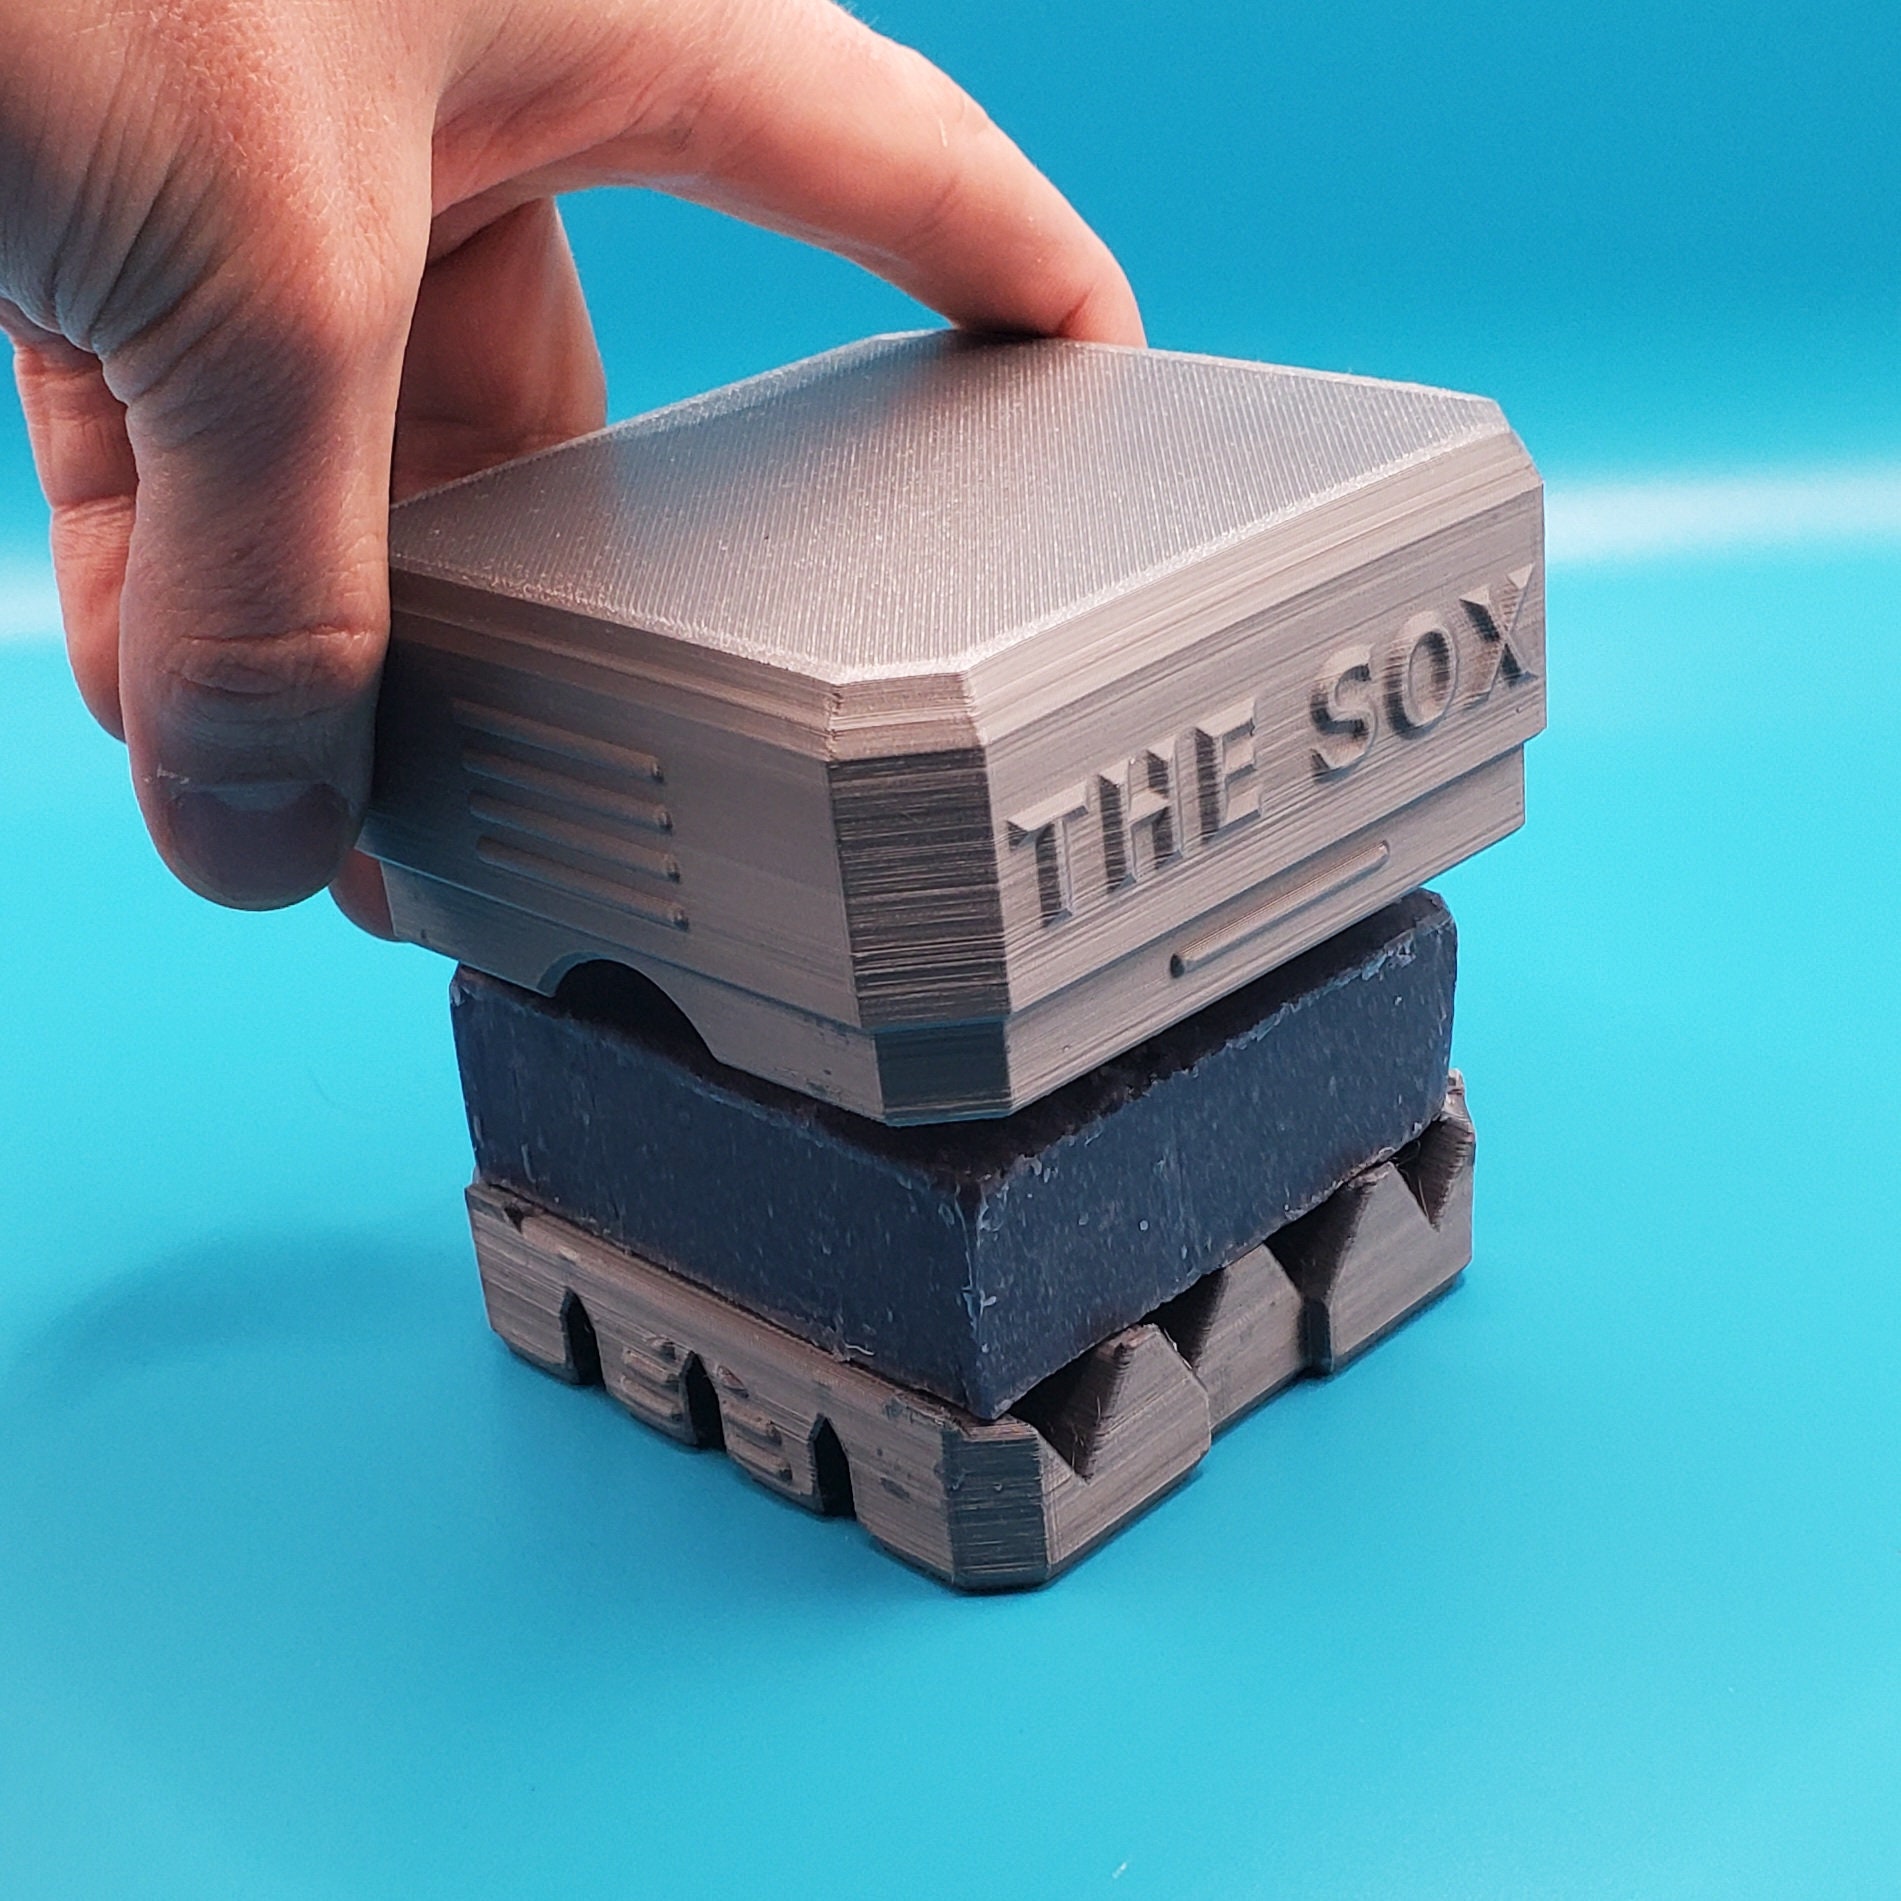 Low Profile Soap Box Compare to Dr. Squatch Soap Saver Travel Case